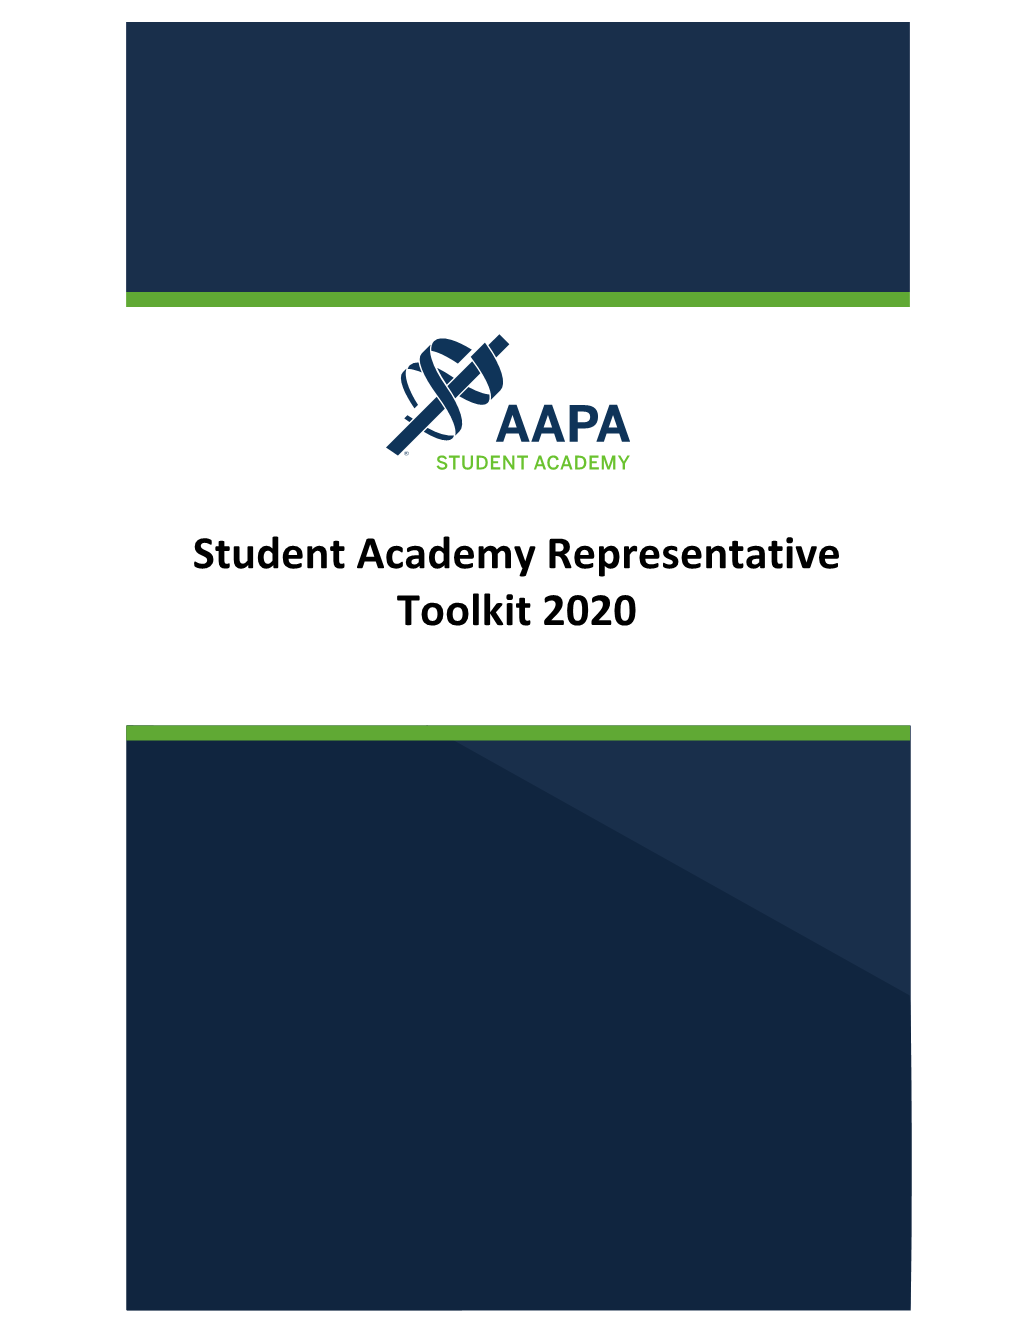 Student Academy Representative Toolkit 2020